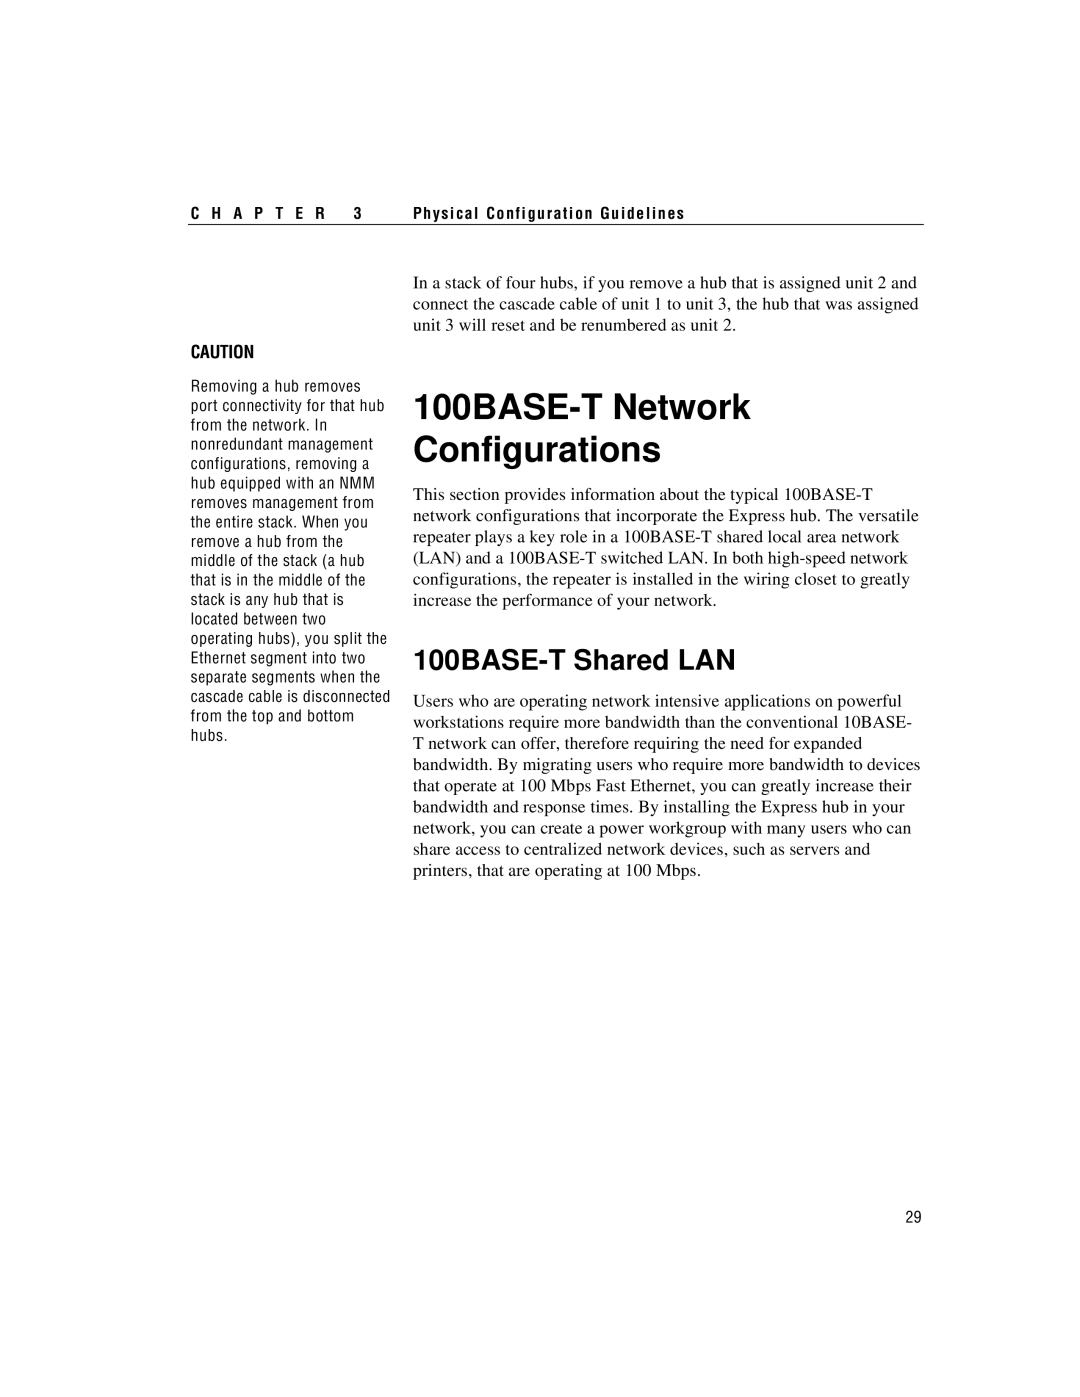 Intel 100BASE-TX manual 100BASE-TShared LAN, 100BASE-TNetwork Configurations 